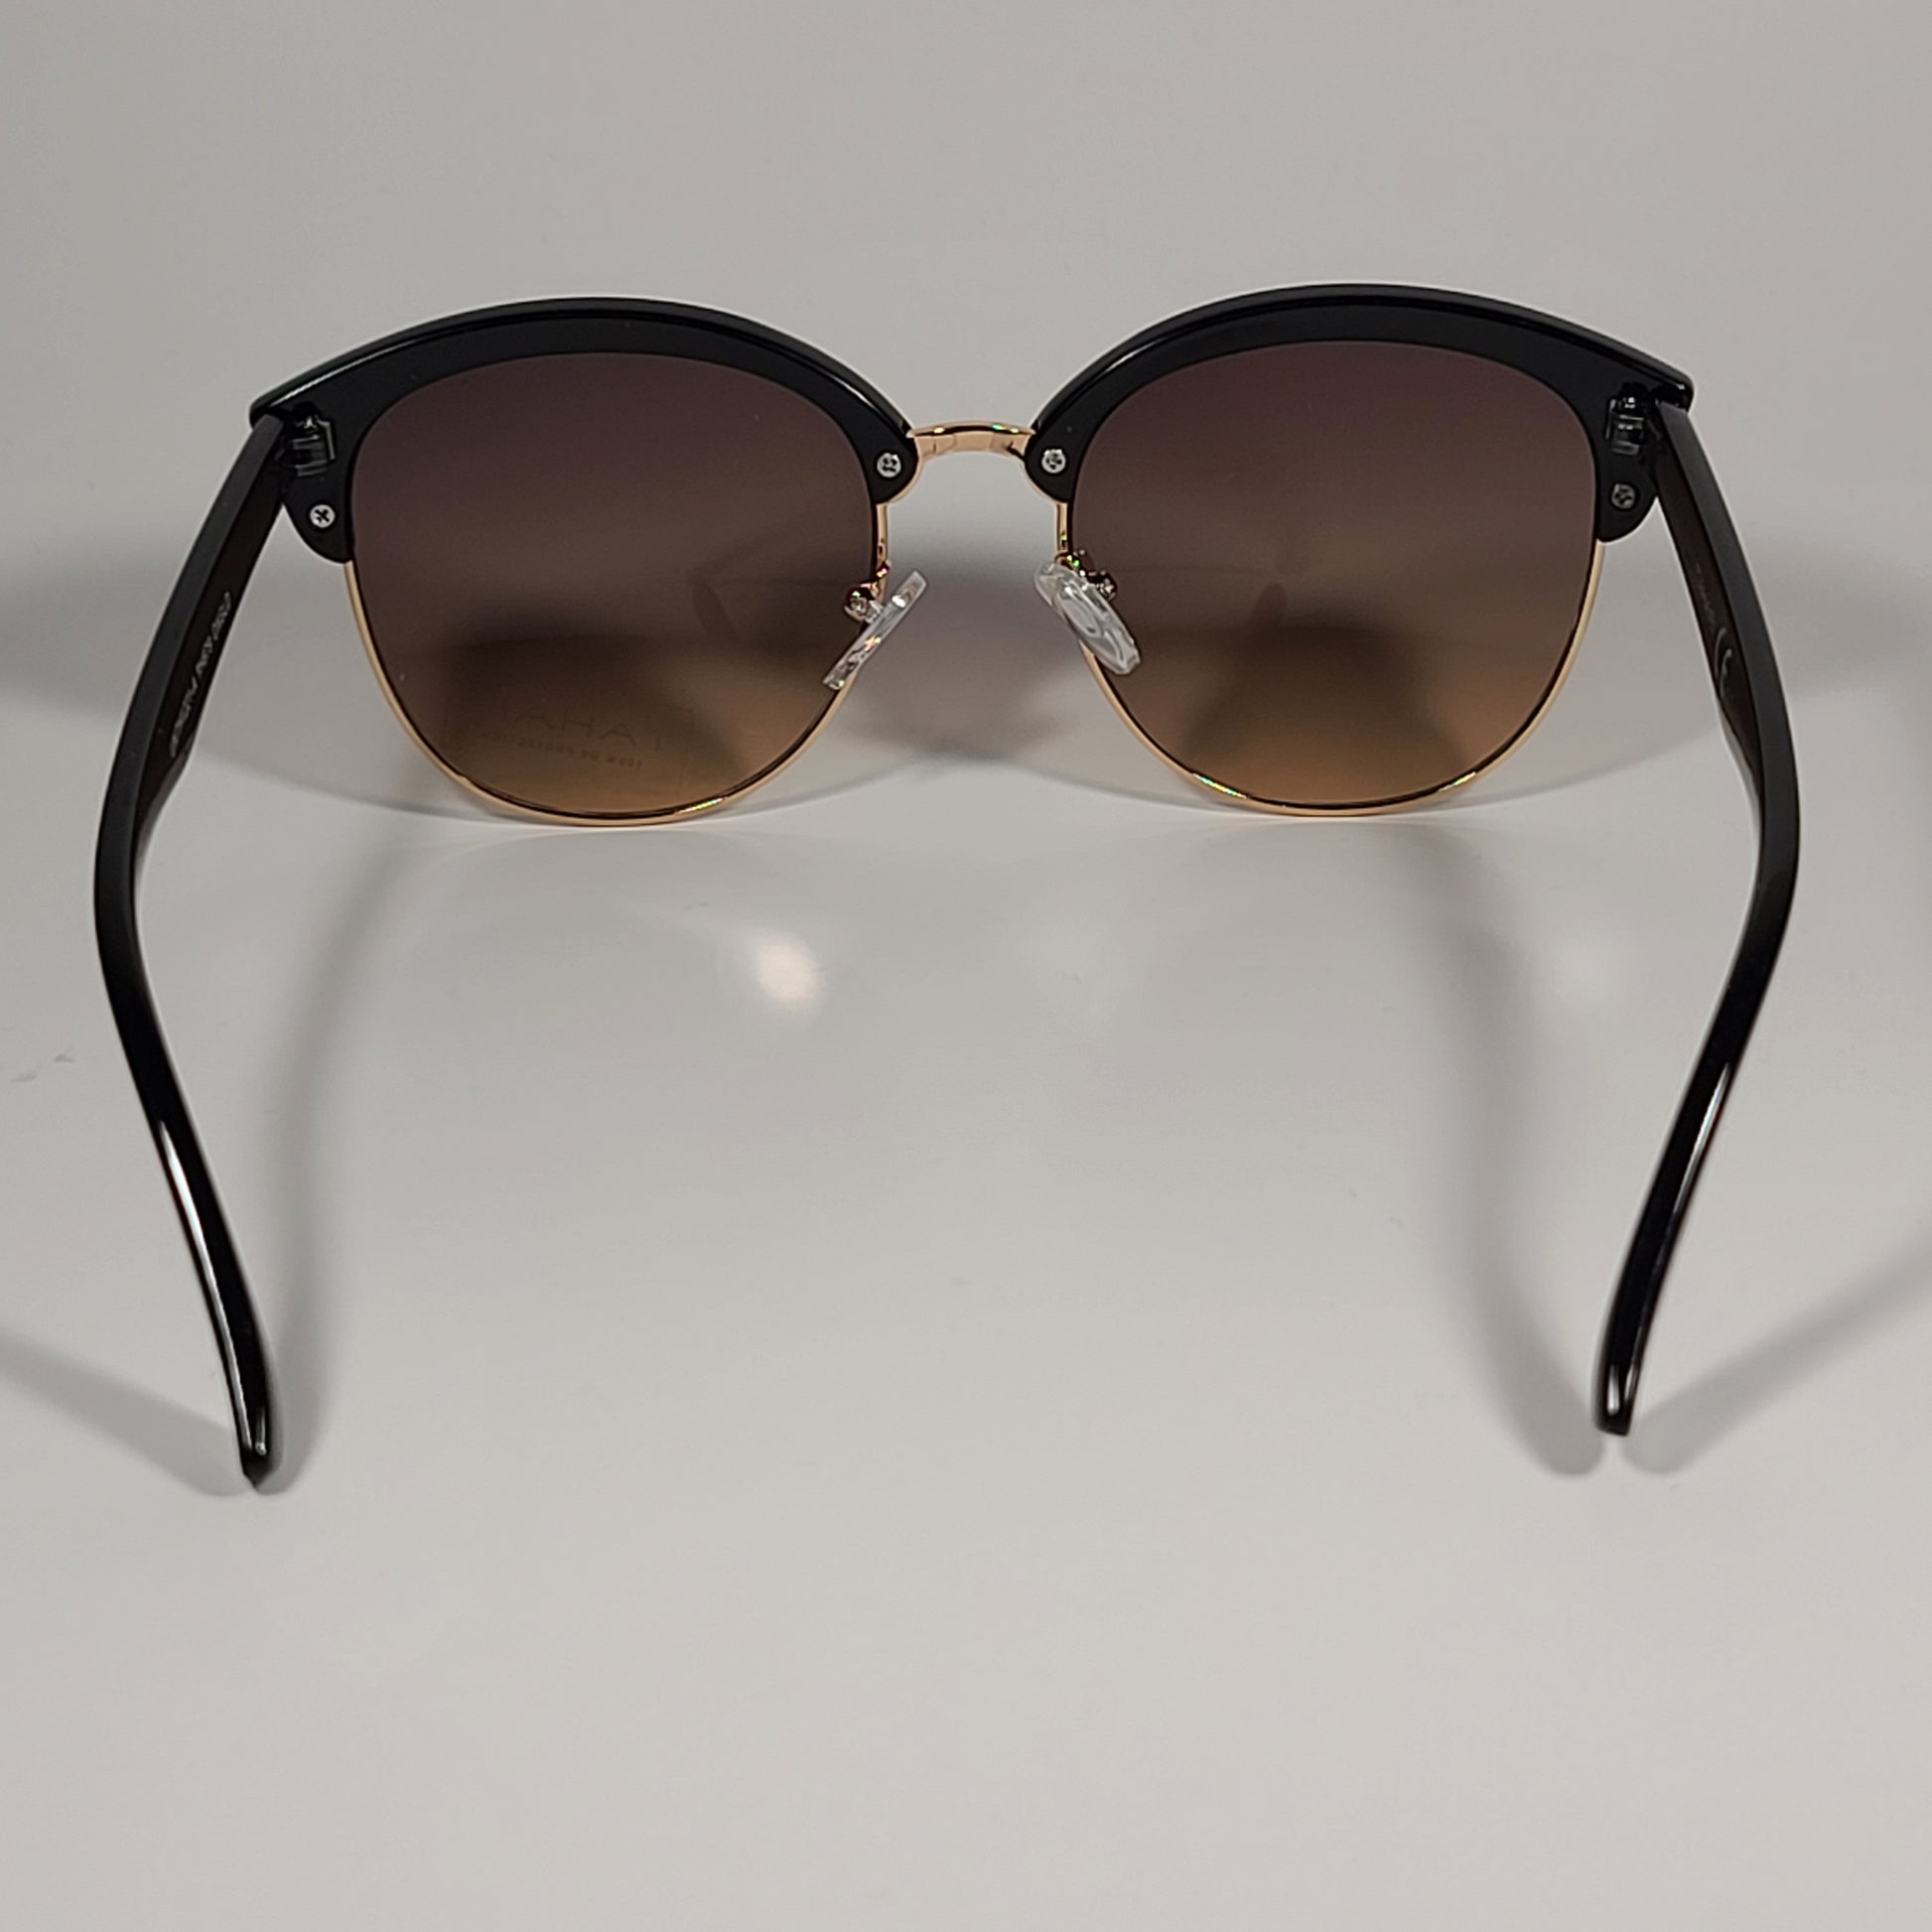 Tahari Round Club Sunglasses Black Gold Frame Brown Gradient Lens TH679 OXGLD - Sunglasses